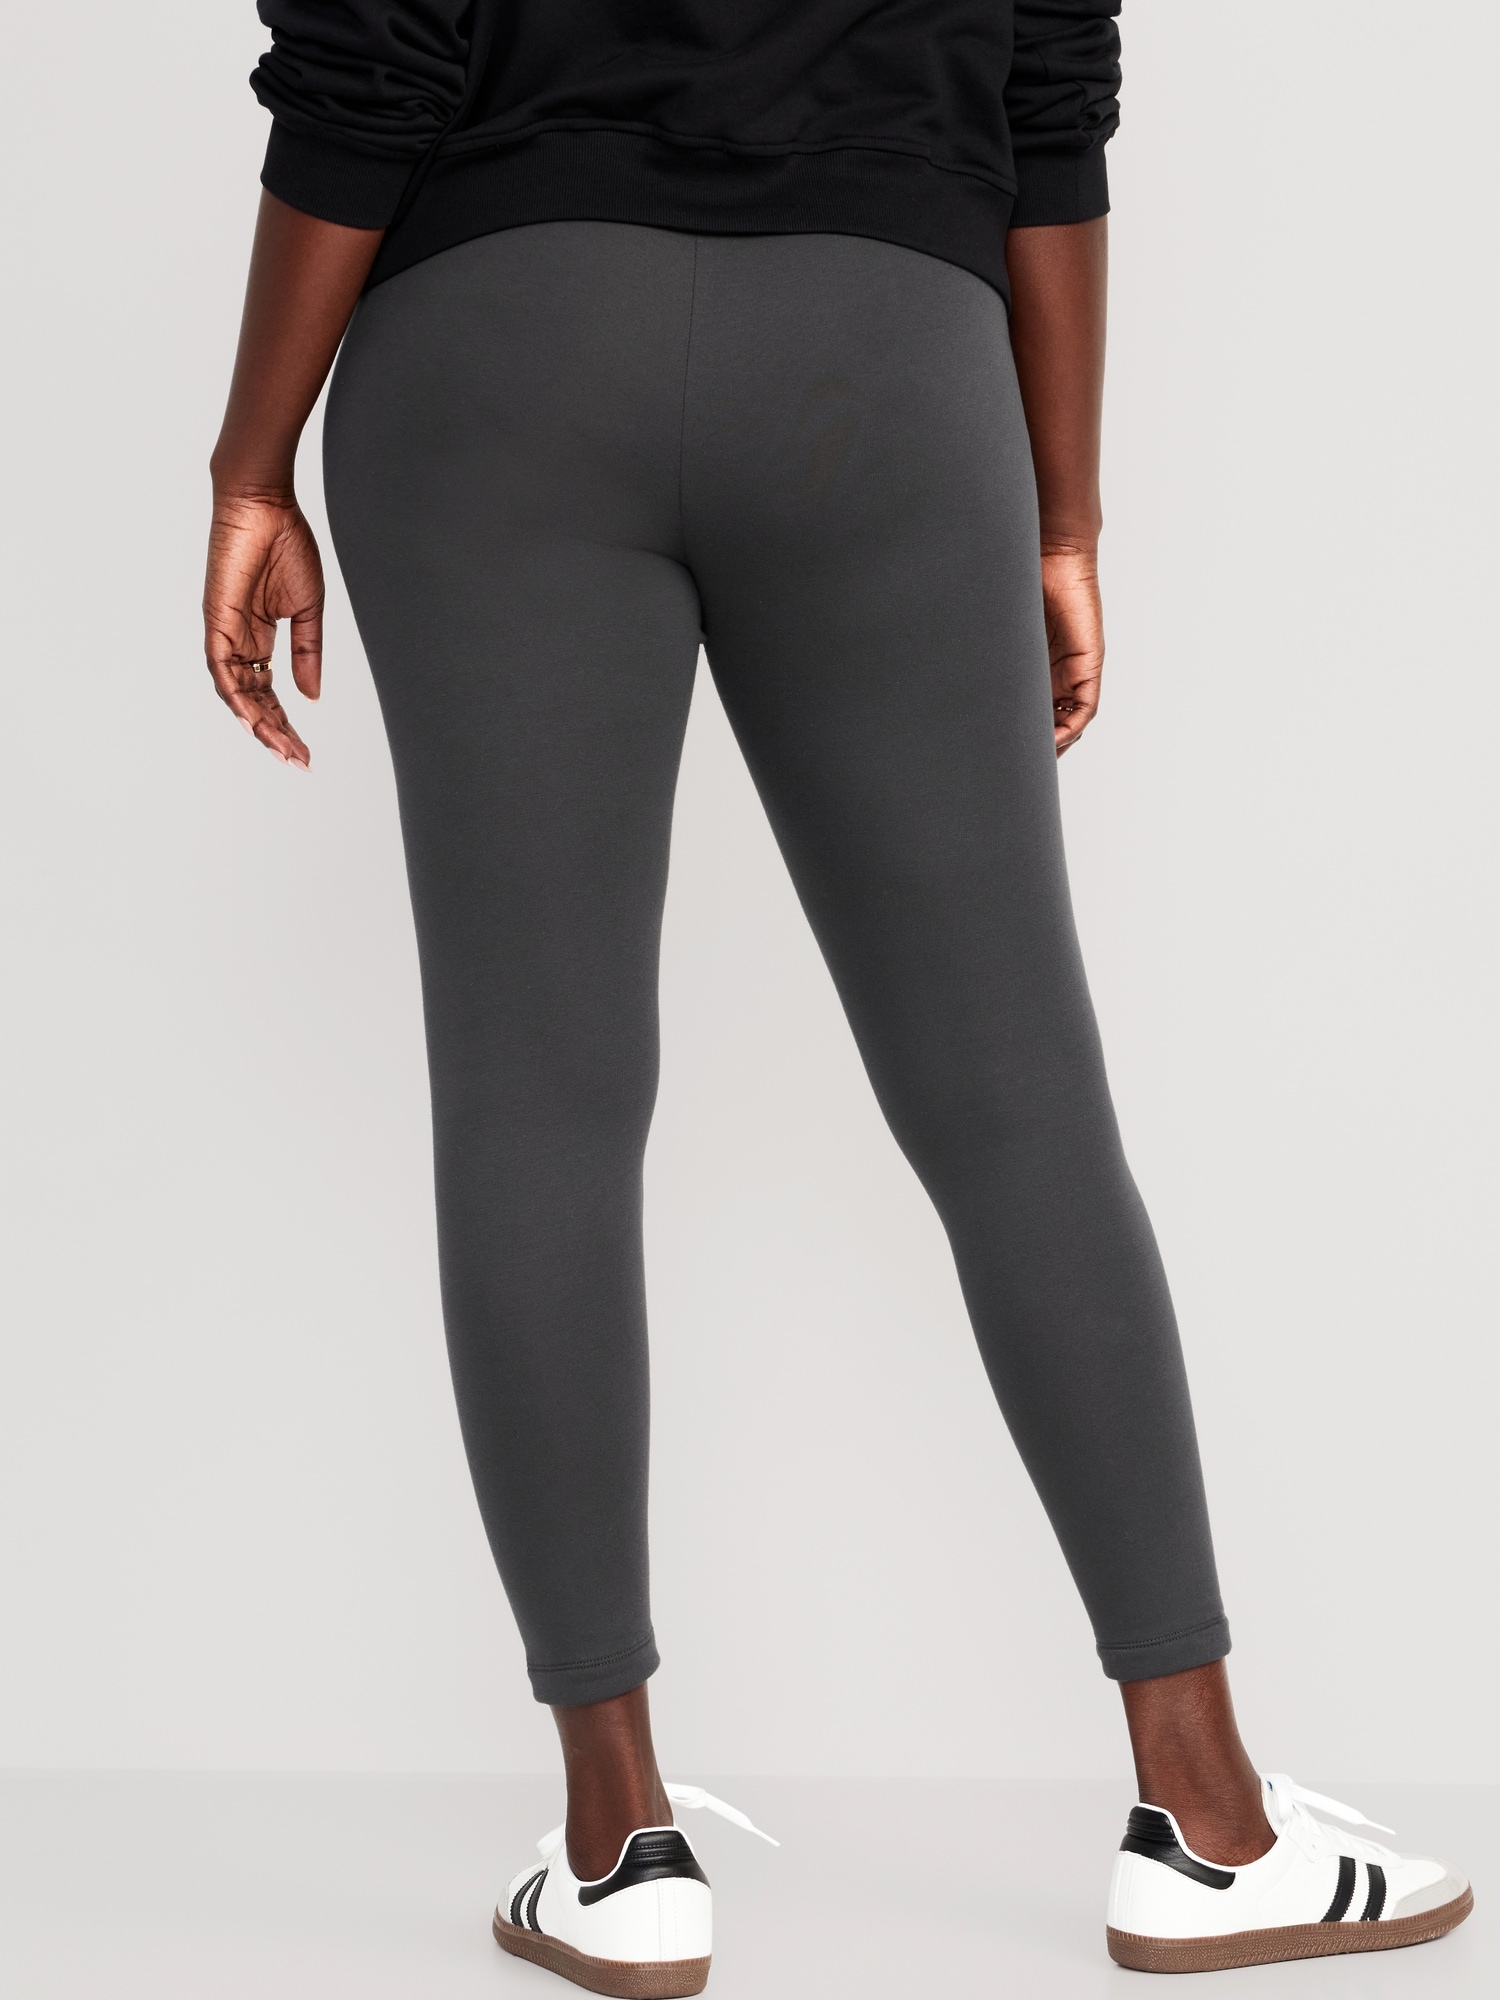 Lululemon Womens Black Pants Size 6 Fleece Lined